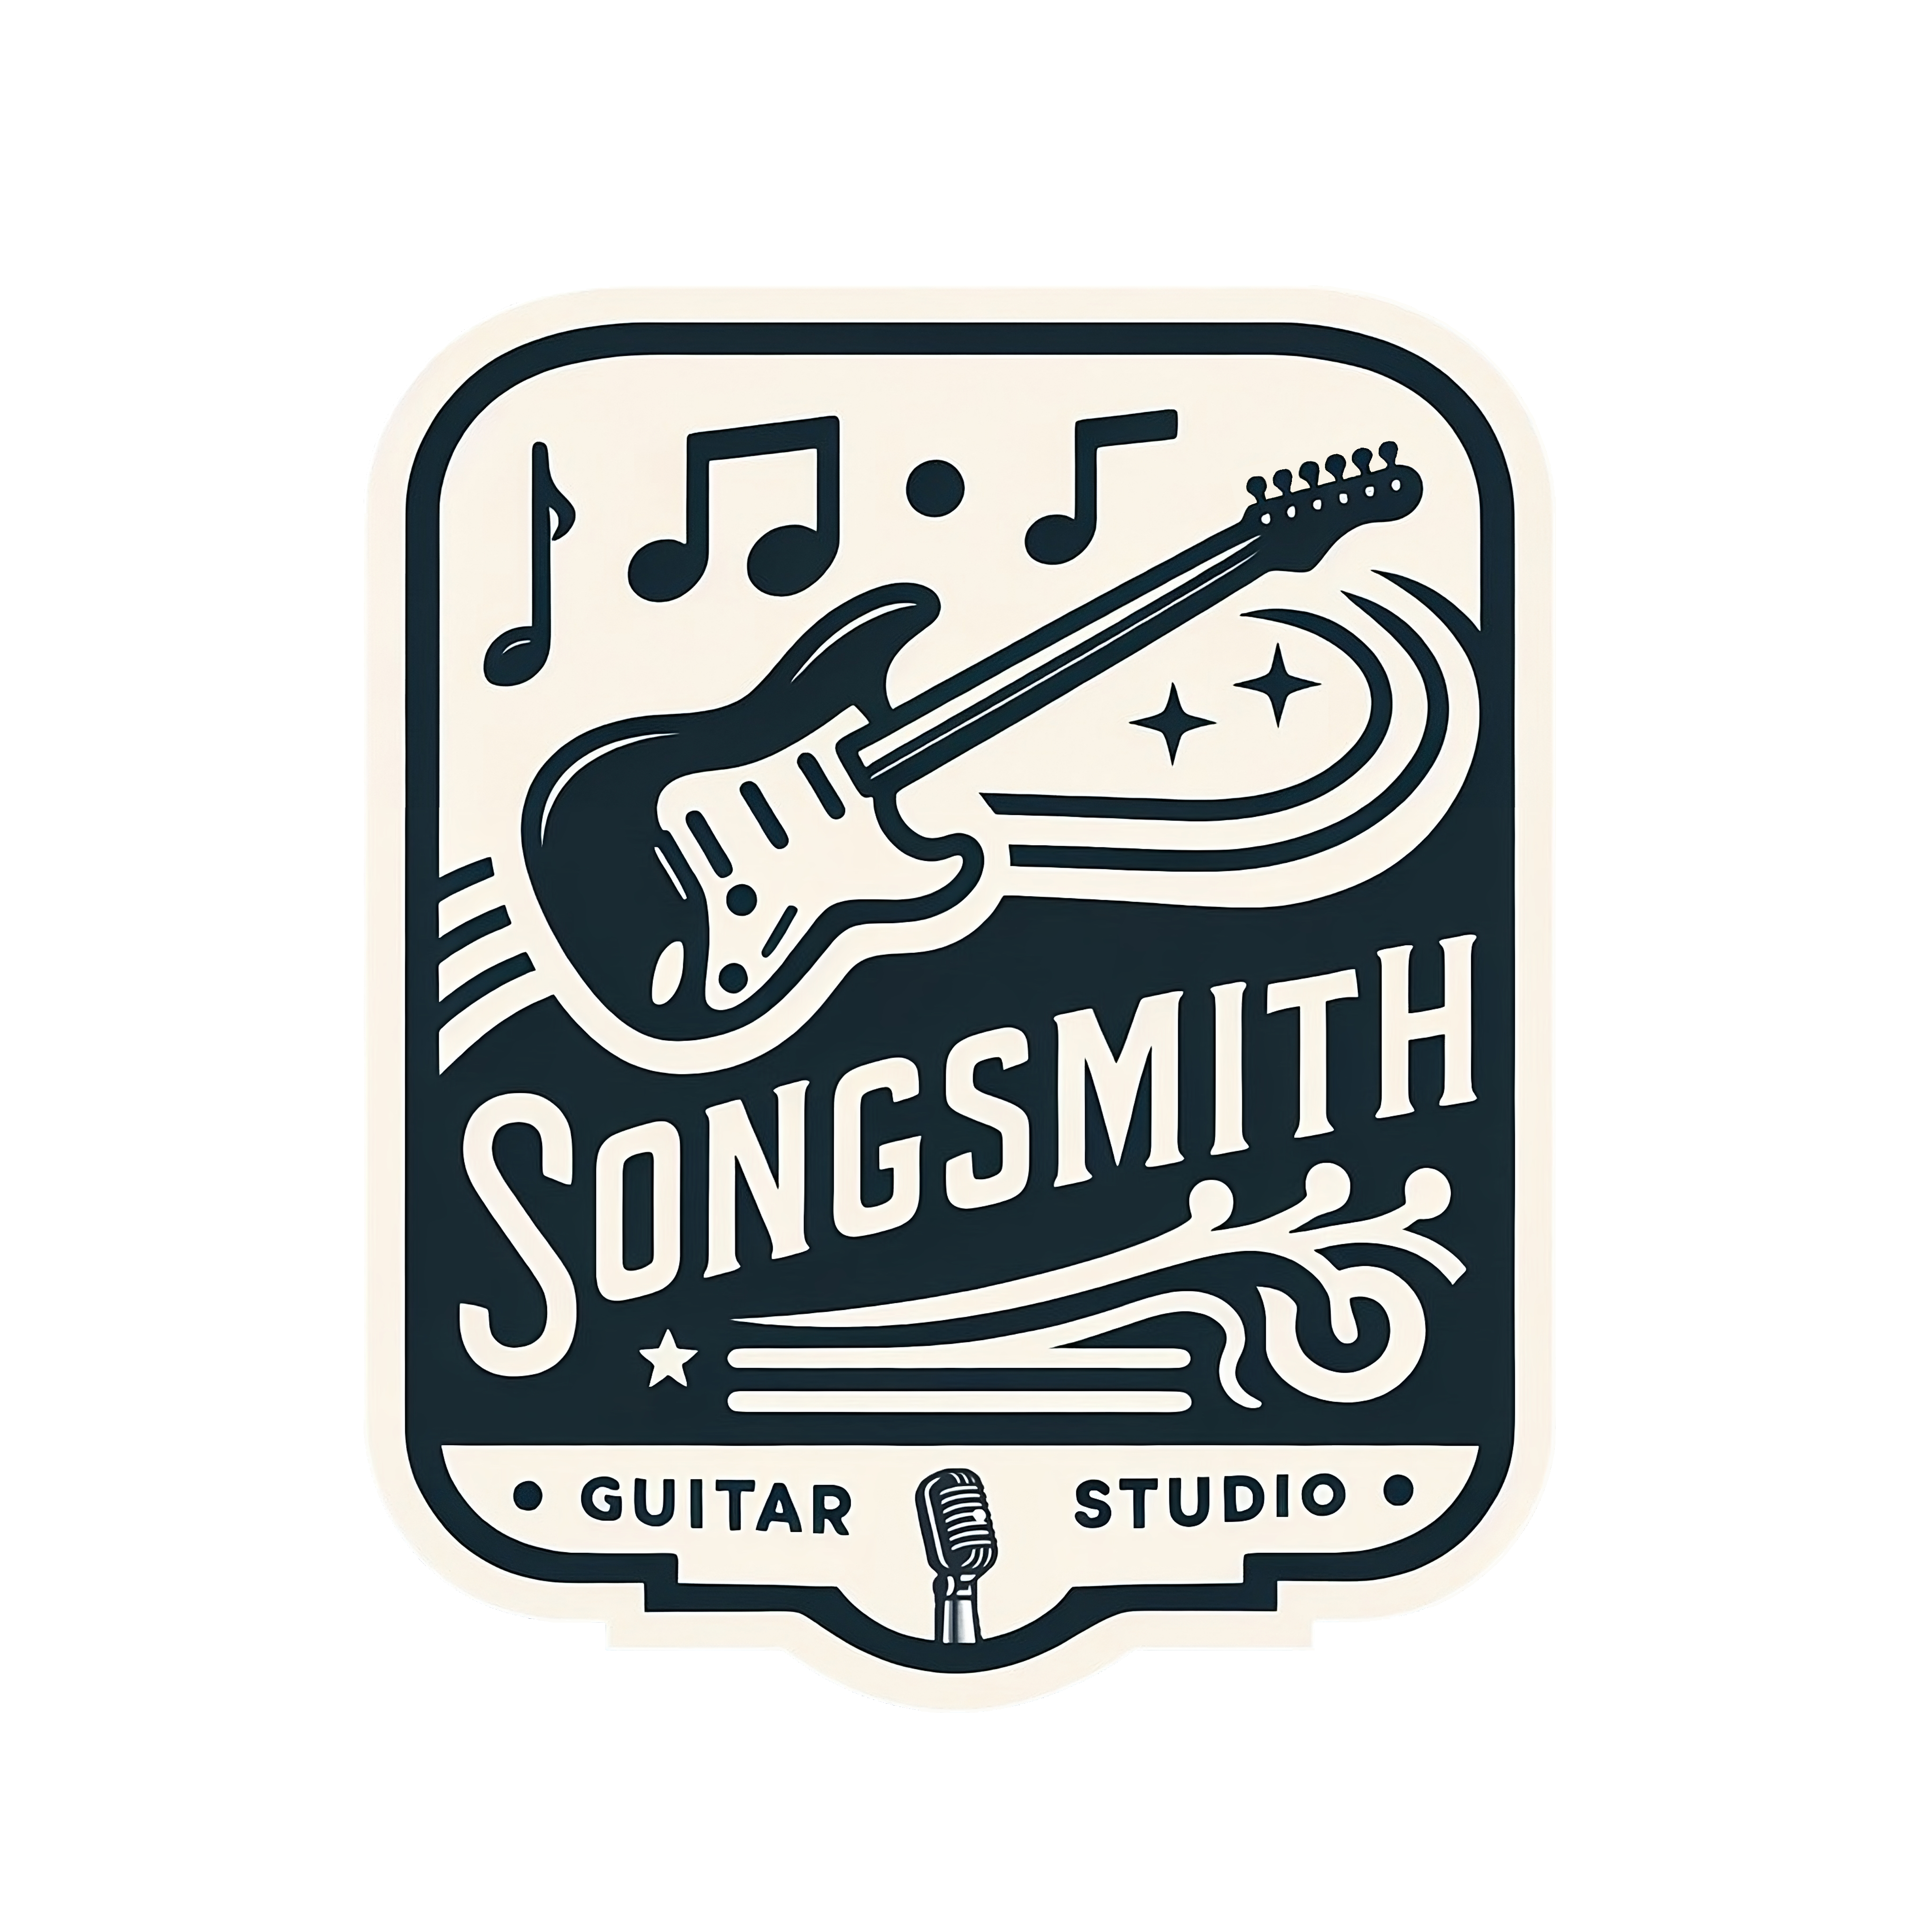 Songsmith Guitar Studio